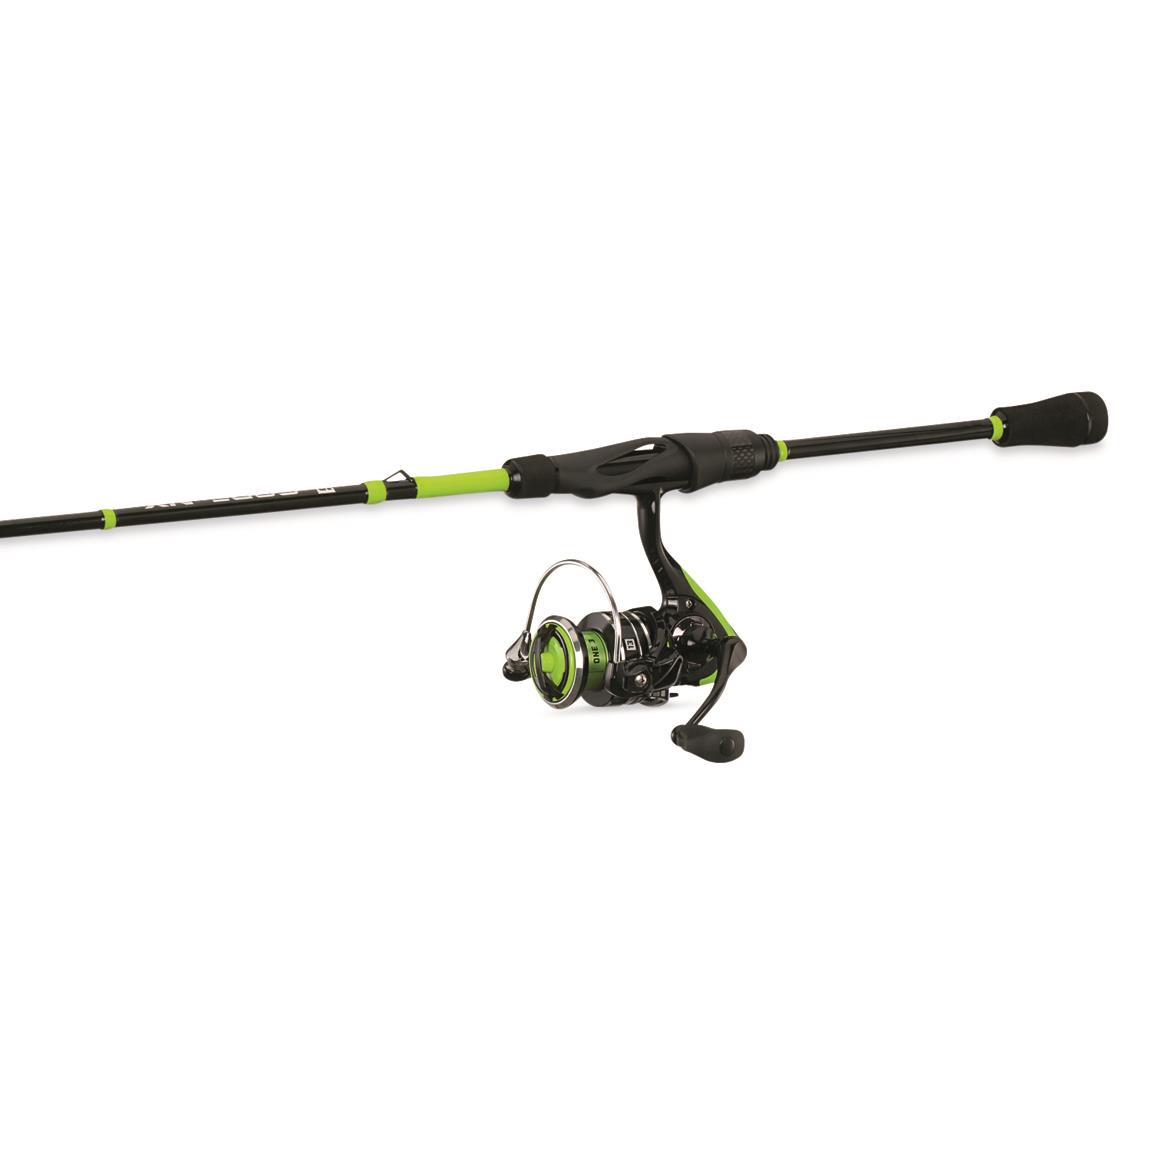 13 Fishing Code NX Spinning Combo, 6'3 Length, Ultra Light Power, 1000 Reel Size